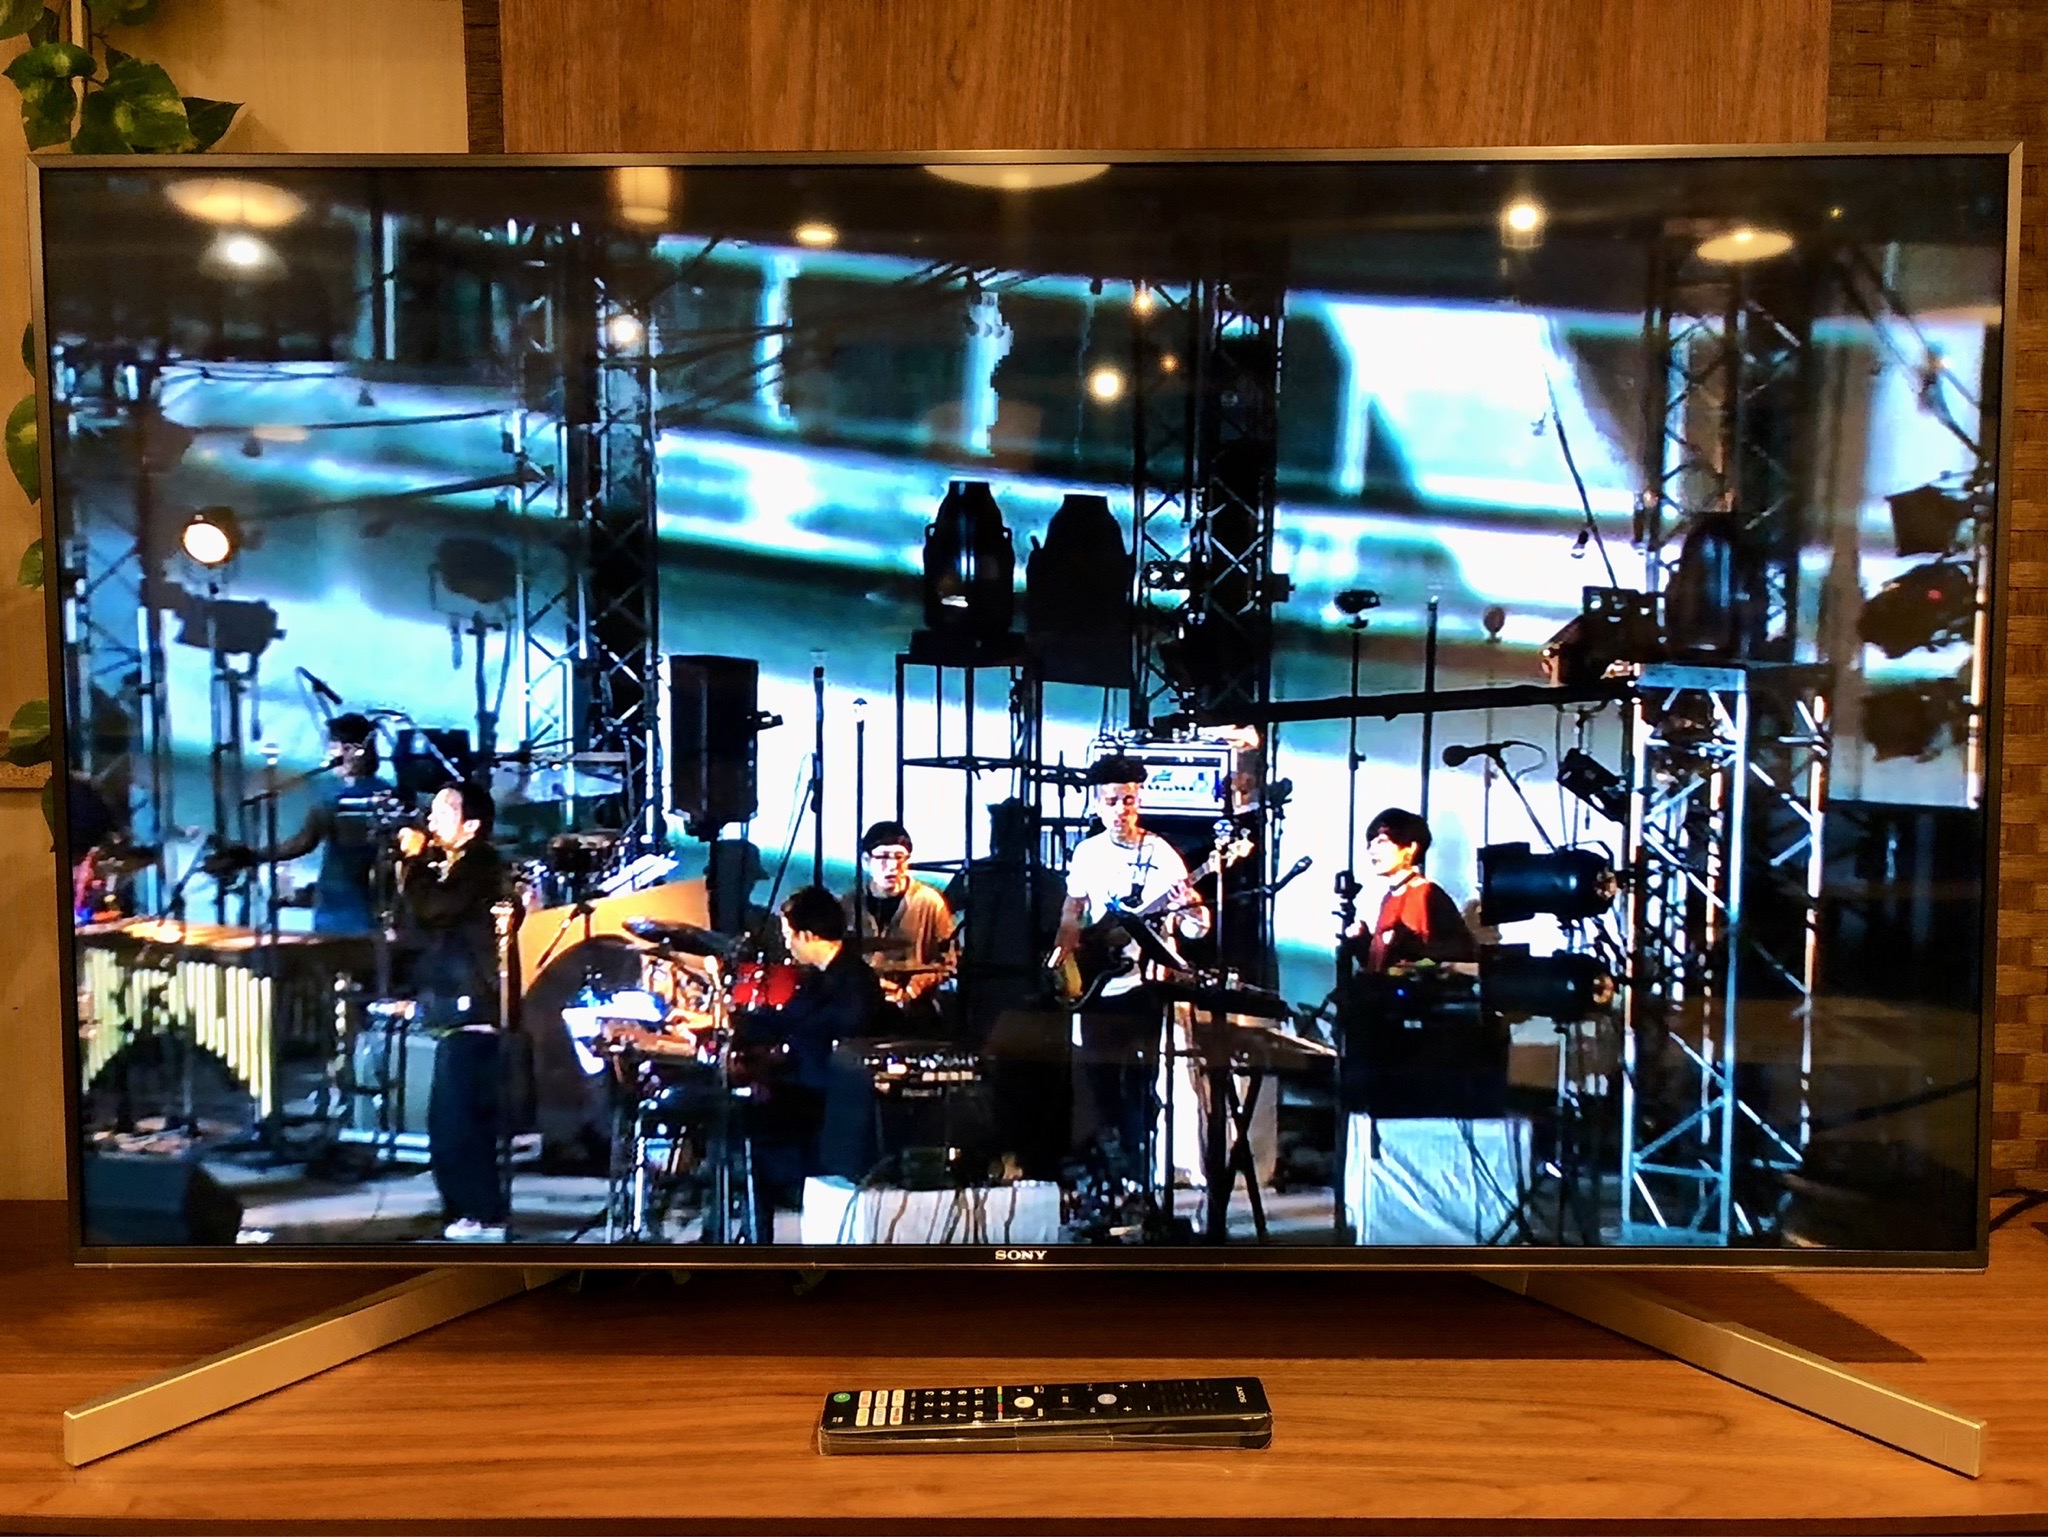 SONY 2019年製 4K対応 49型液晶テレビ BRAVIA KJ-49X9000F 買取しま